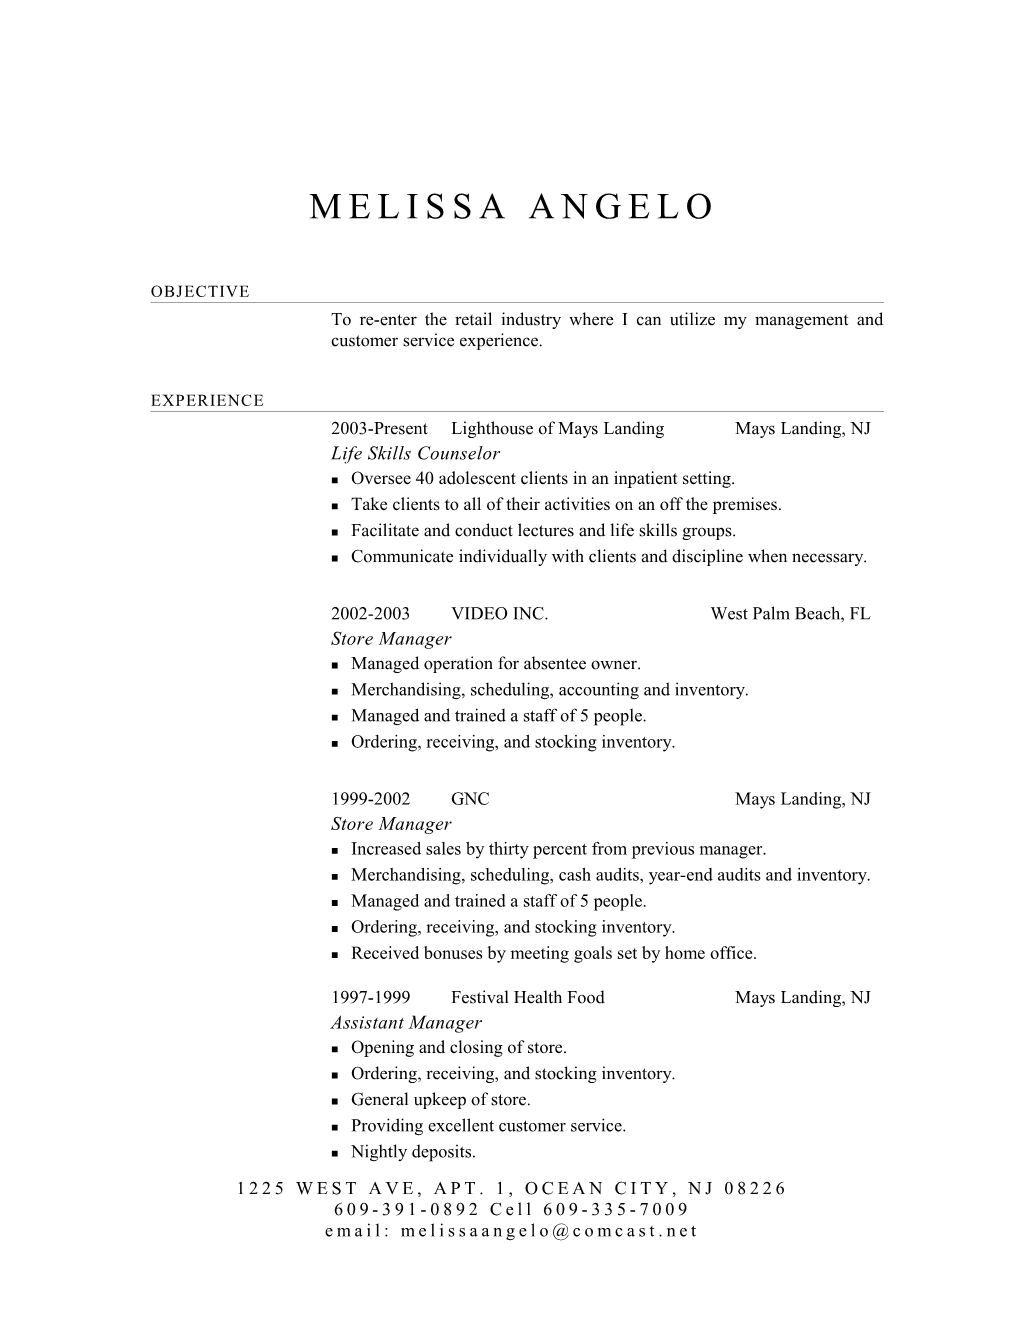 Melissa Angelo Retail Resume